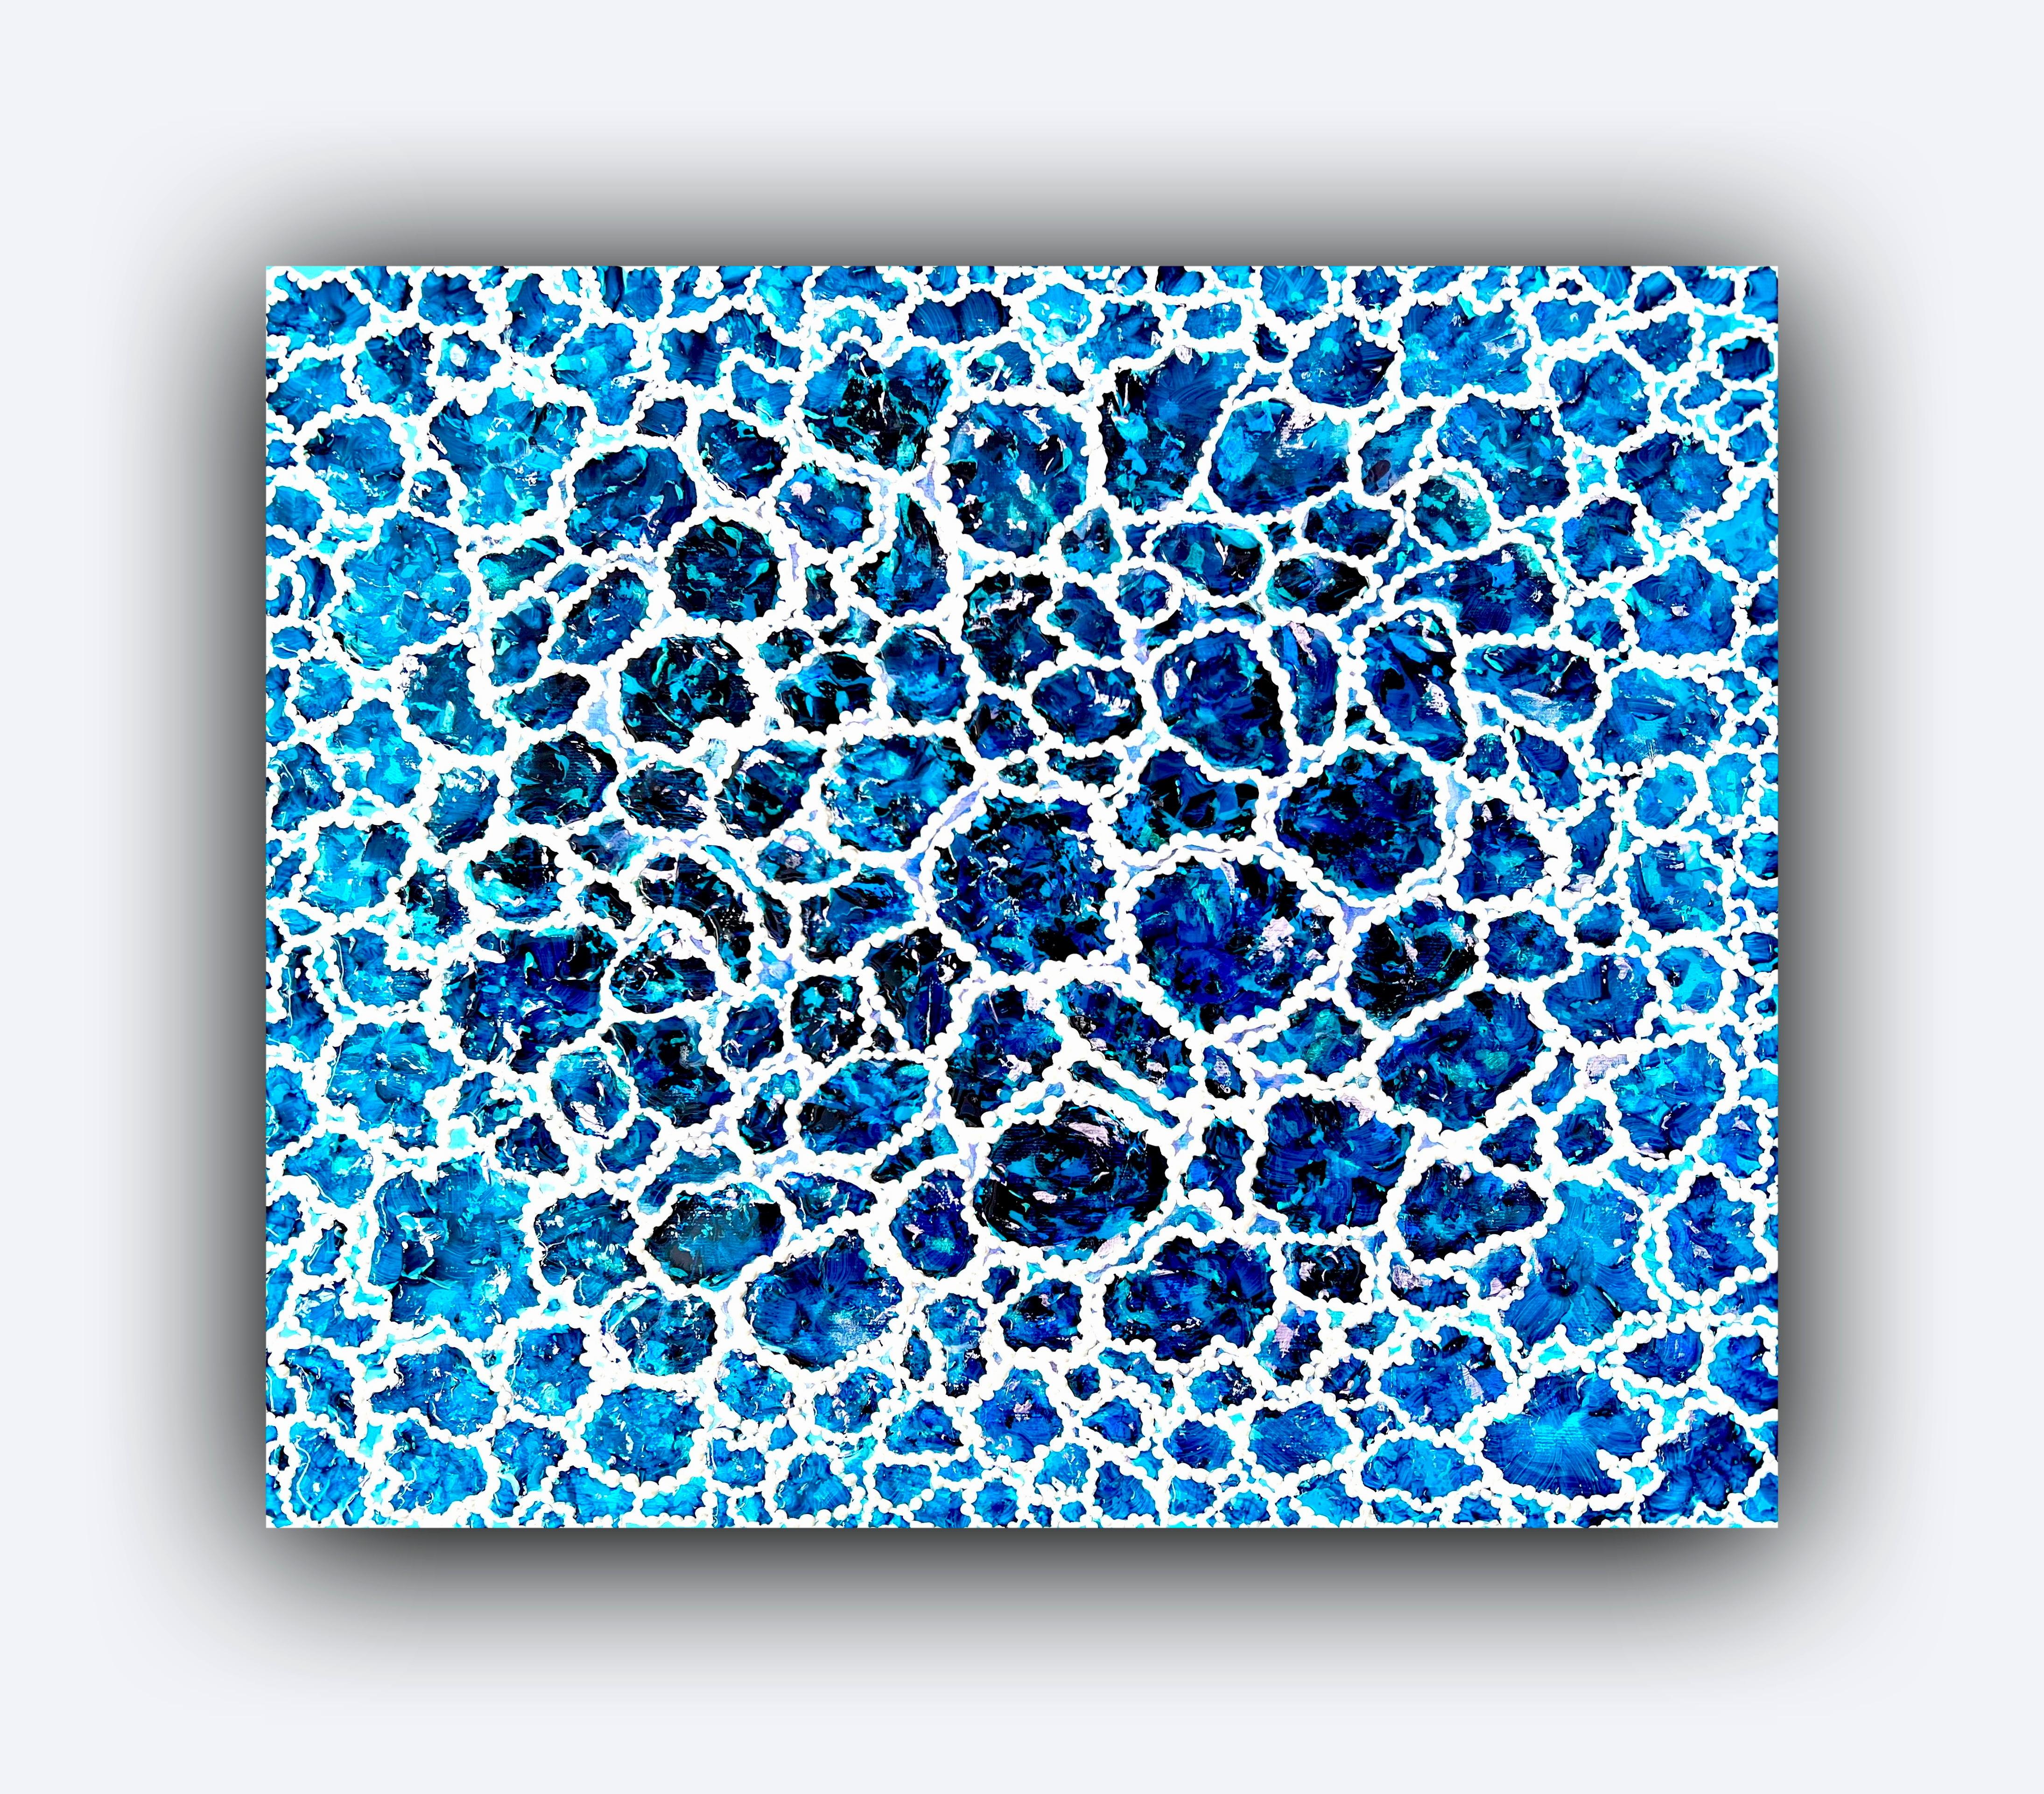 Lagon bleu de l'île de Miyako. Peinture abstraite. Aquarelle / Mer / Bleu. 50x60cm 